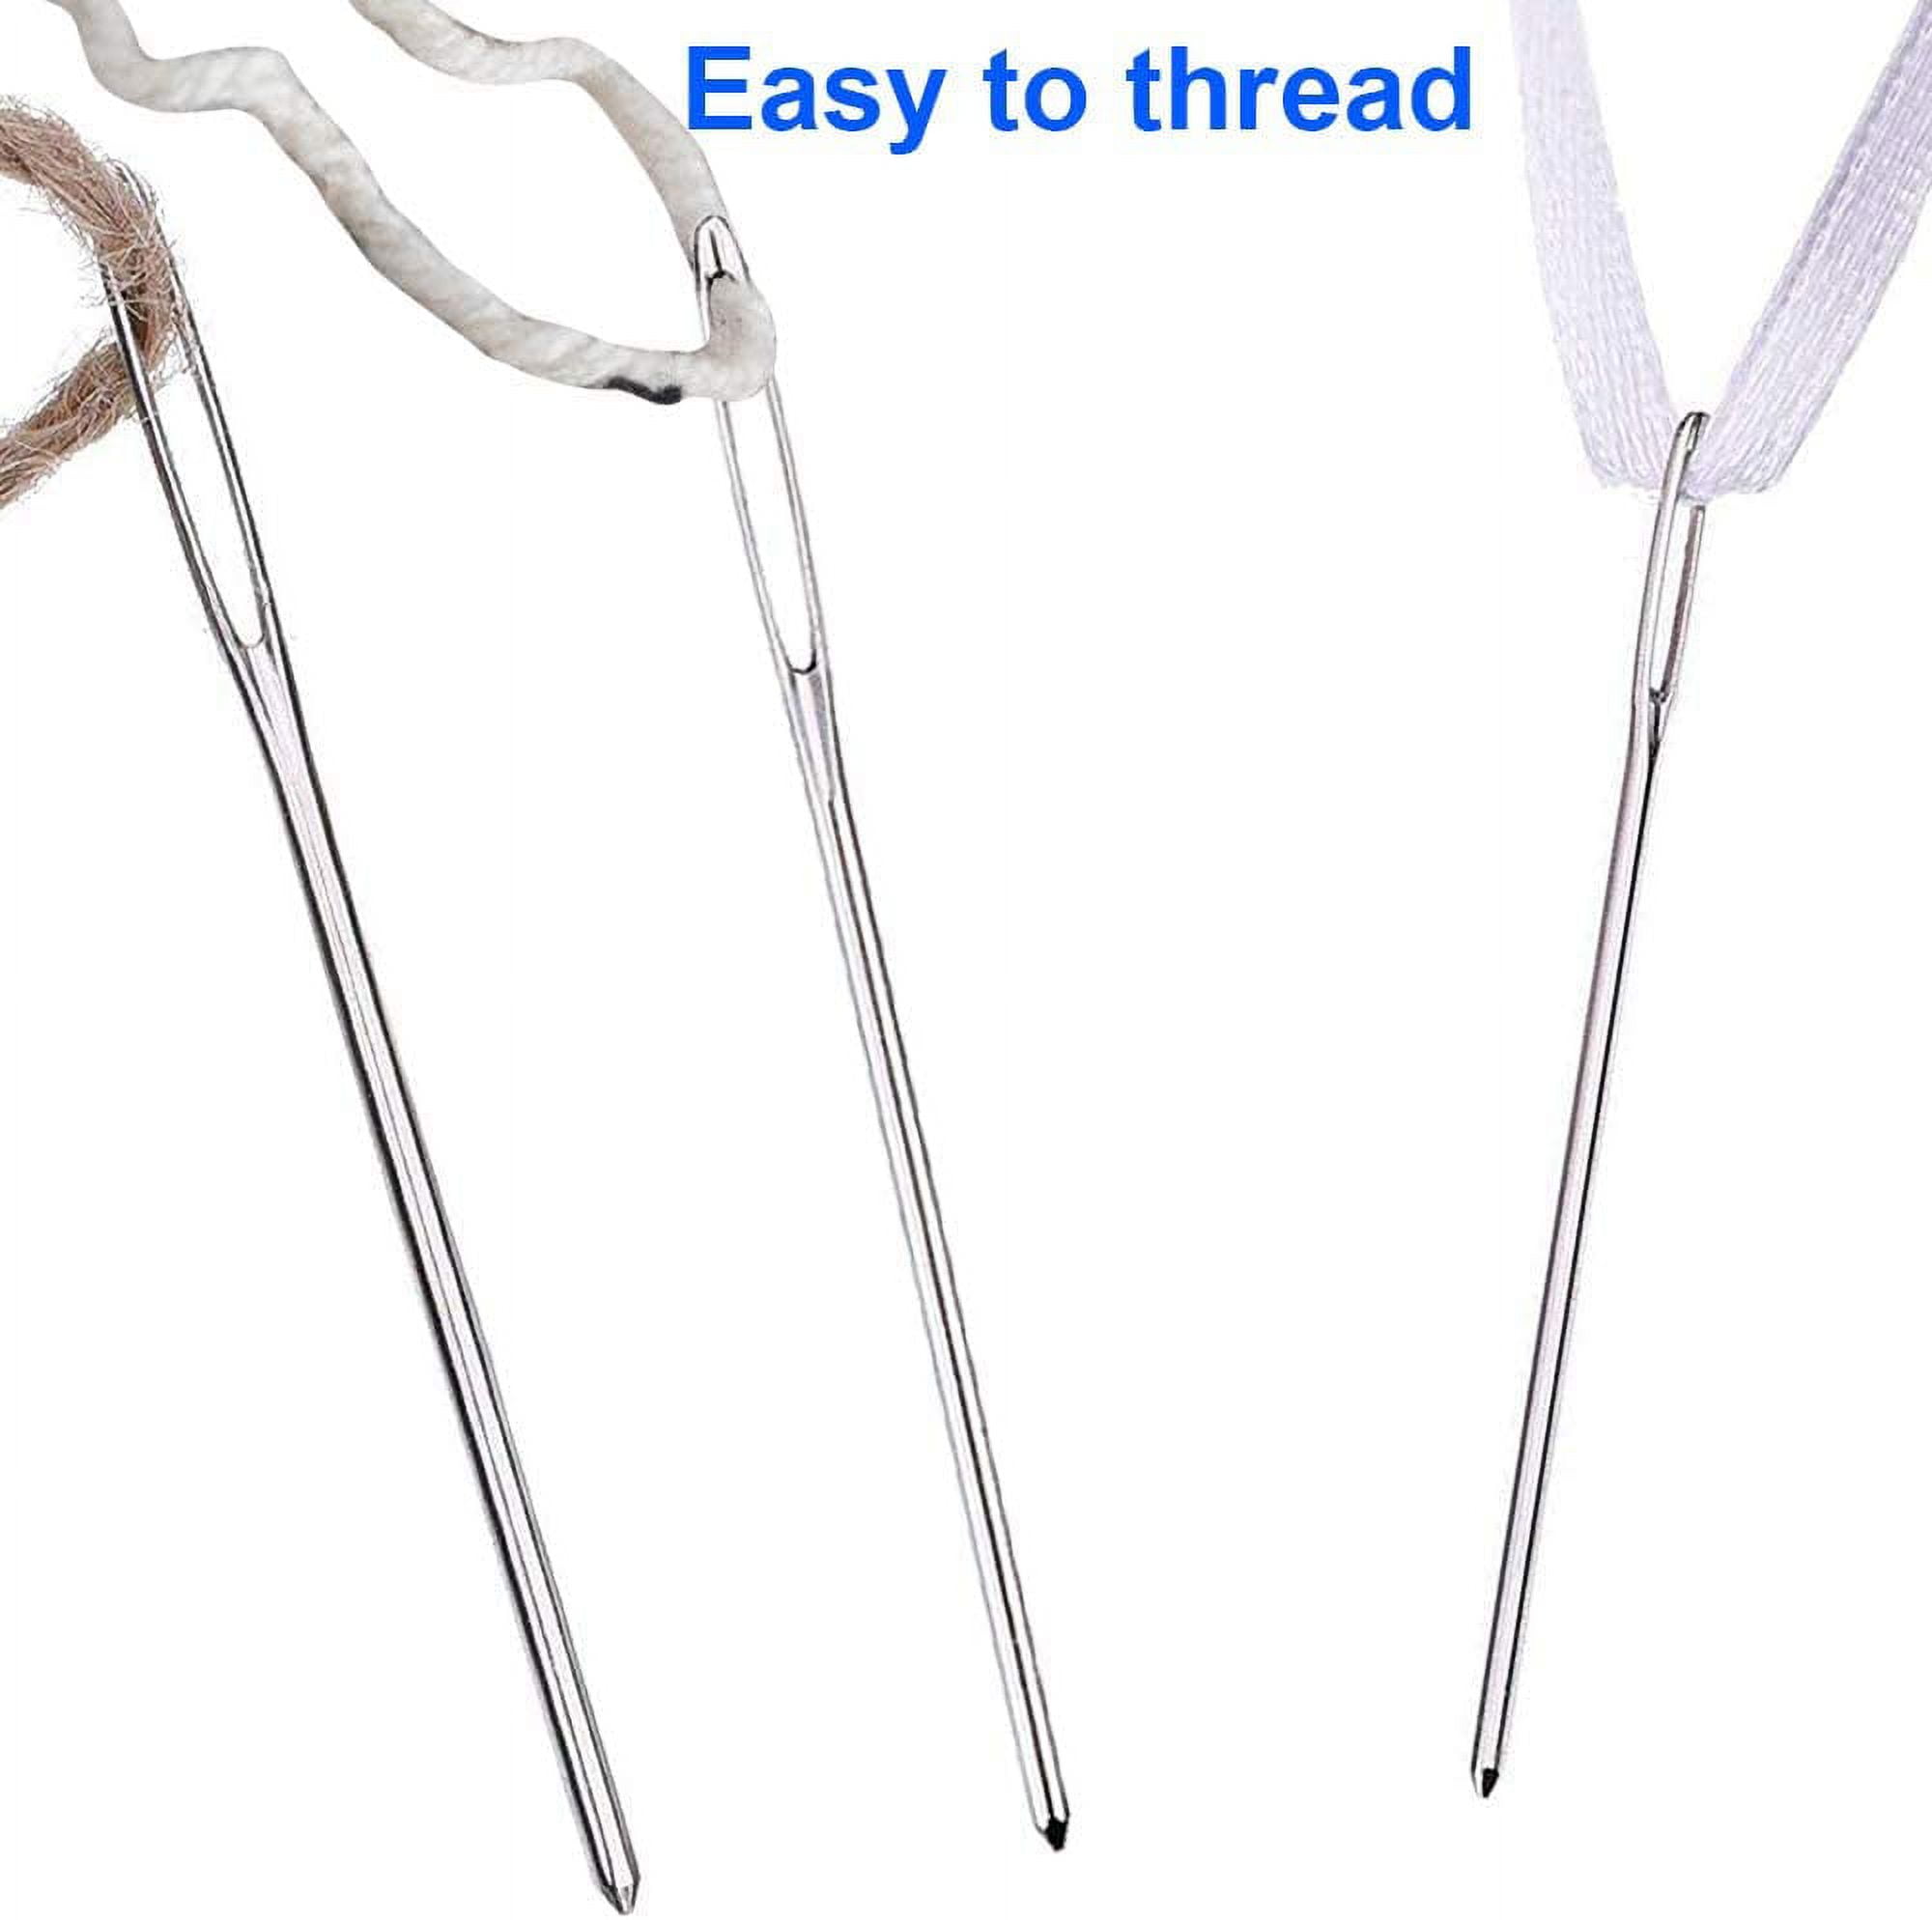 Hekisn Large-Eye Blunt Needles, Stainless Steel Yarn Knitting Needles, Sewing Needles, Crafting Knitting Weaving Stringing Needles, Perfect for